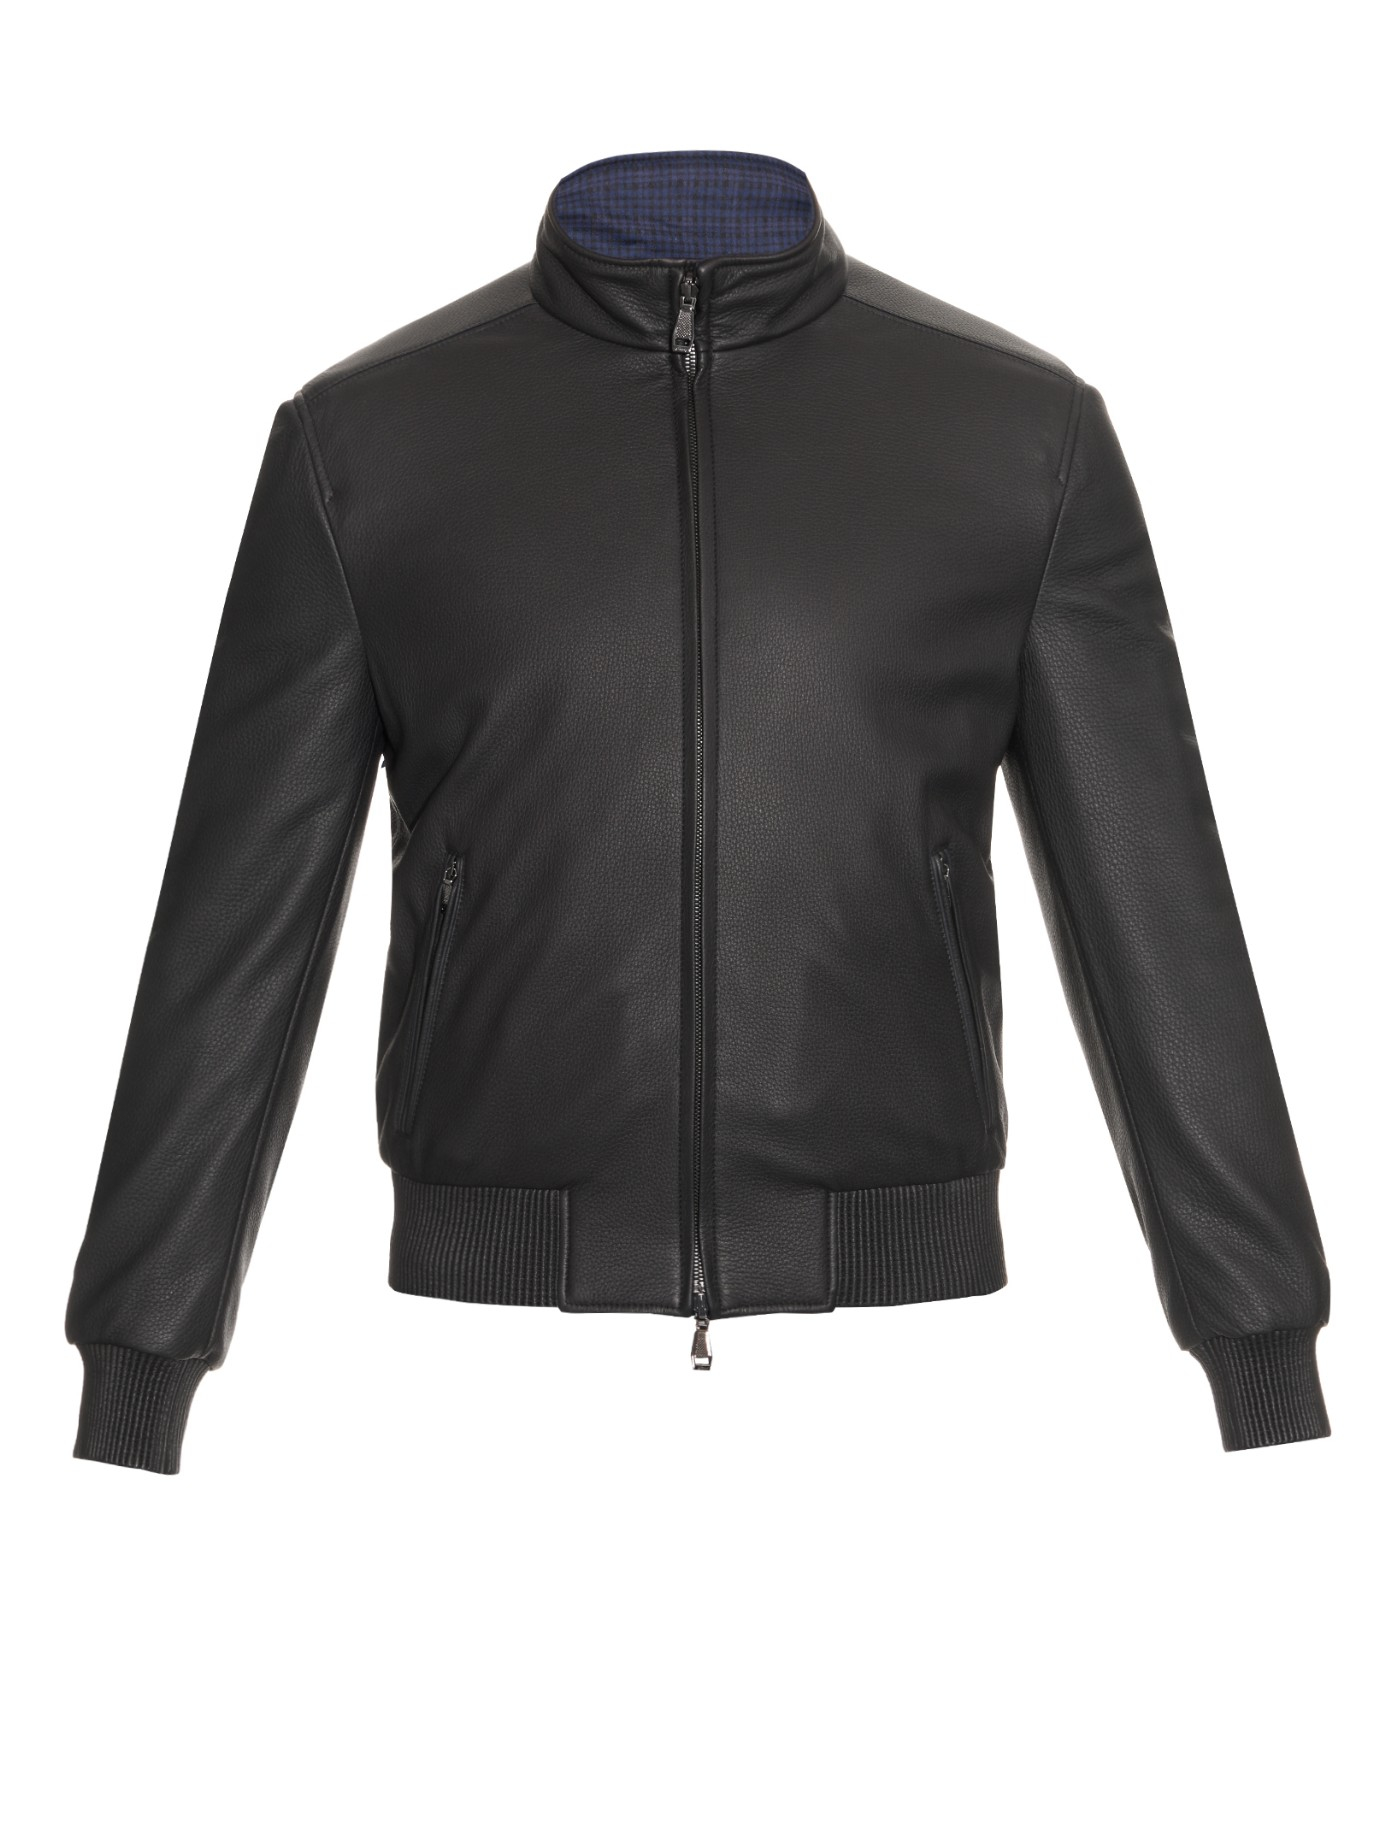 Lyst - Brioni Reversible Leather Jacket in Black for Men